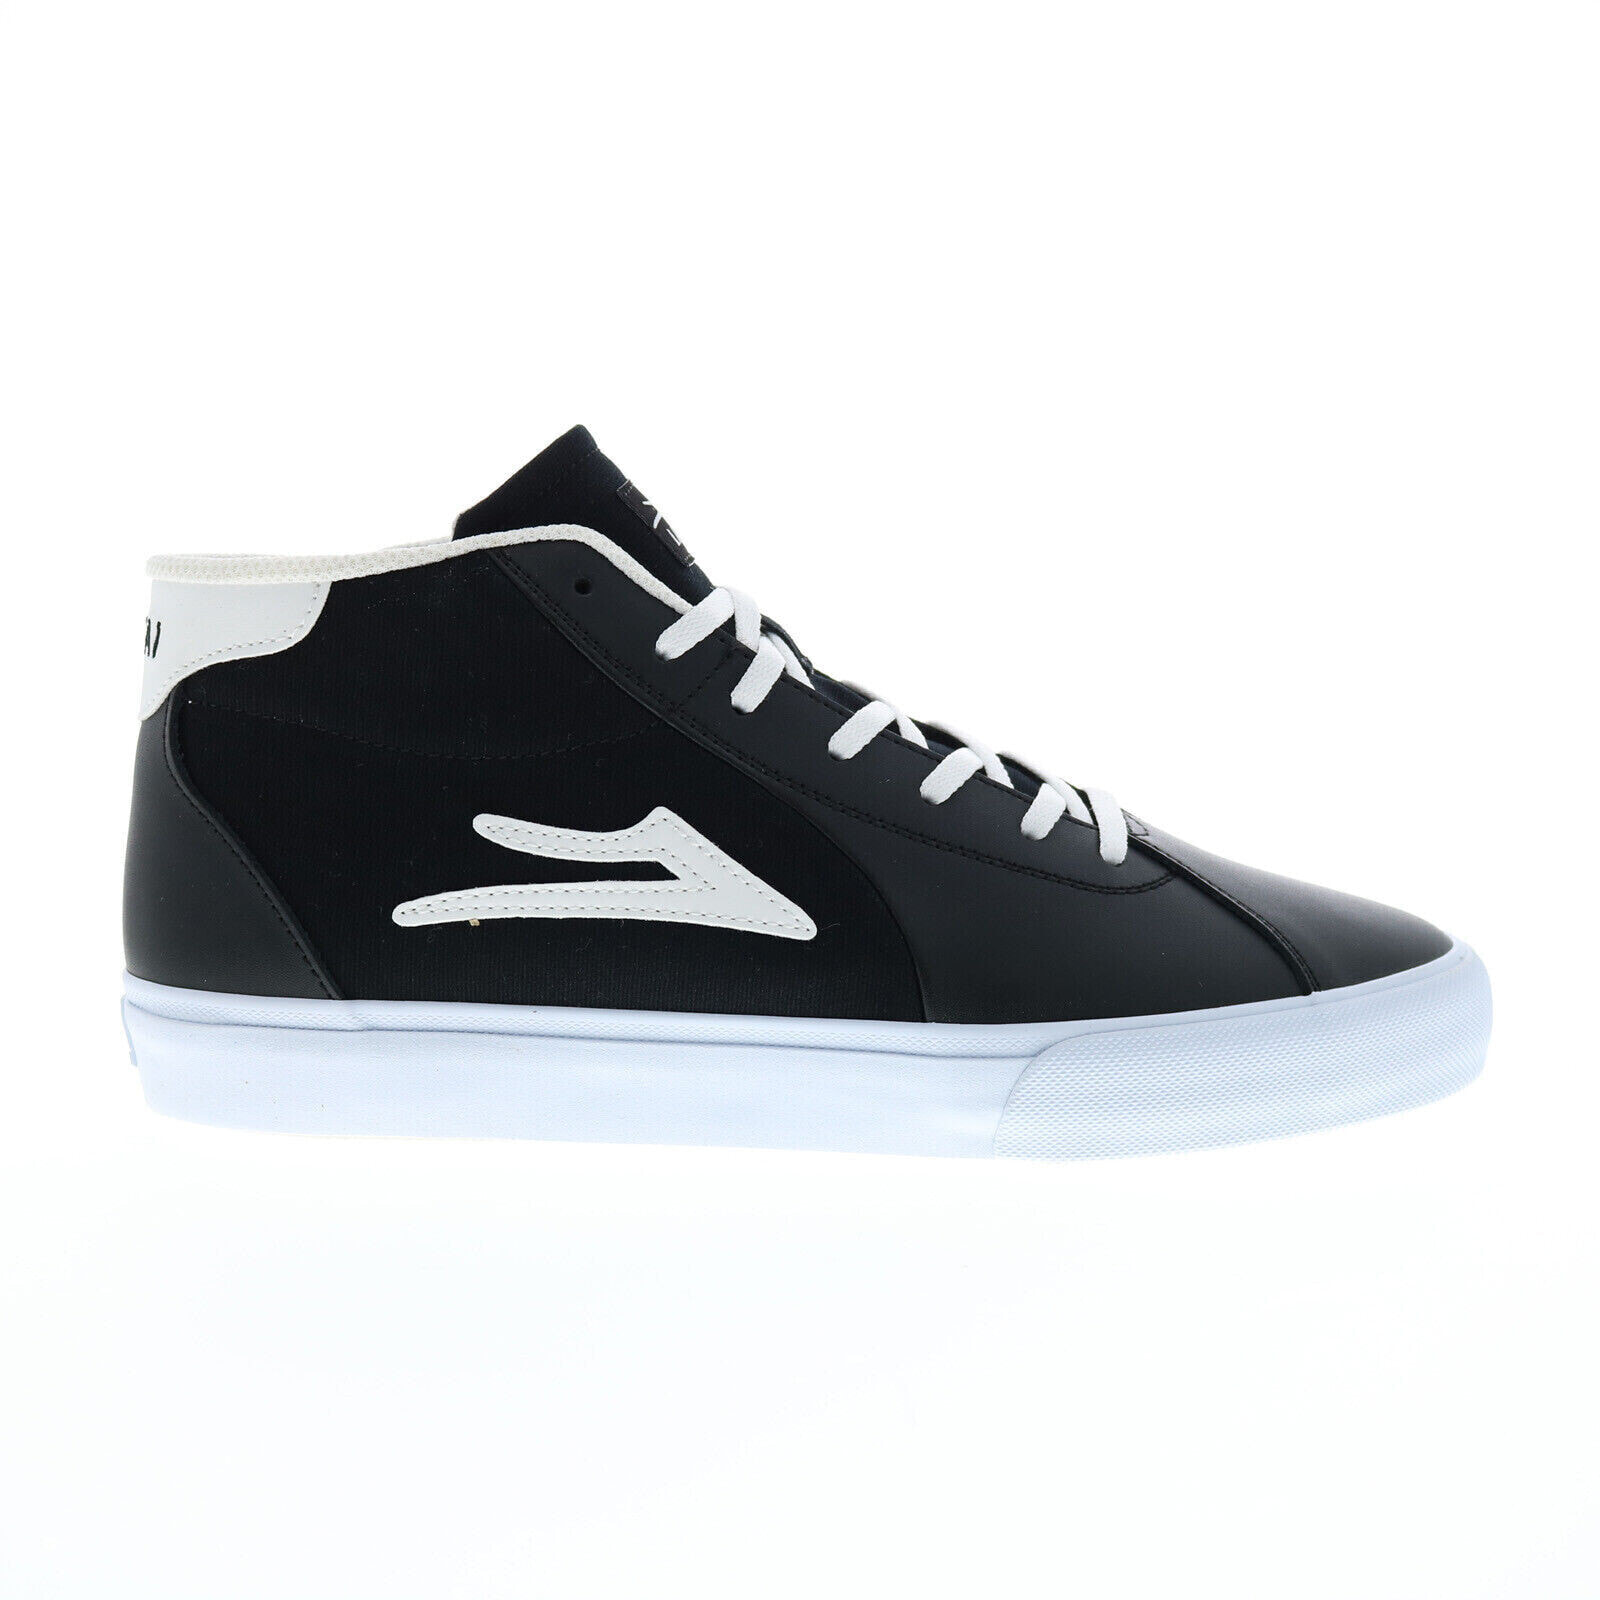 Lakai Flaco II Mid MS1230113A00 Mens Black Skate Inspired Sneakers Shoes 8